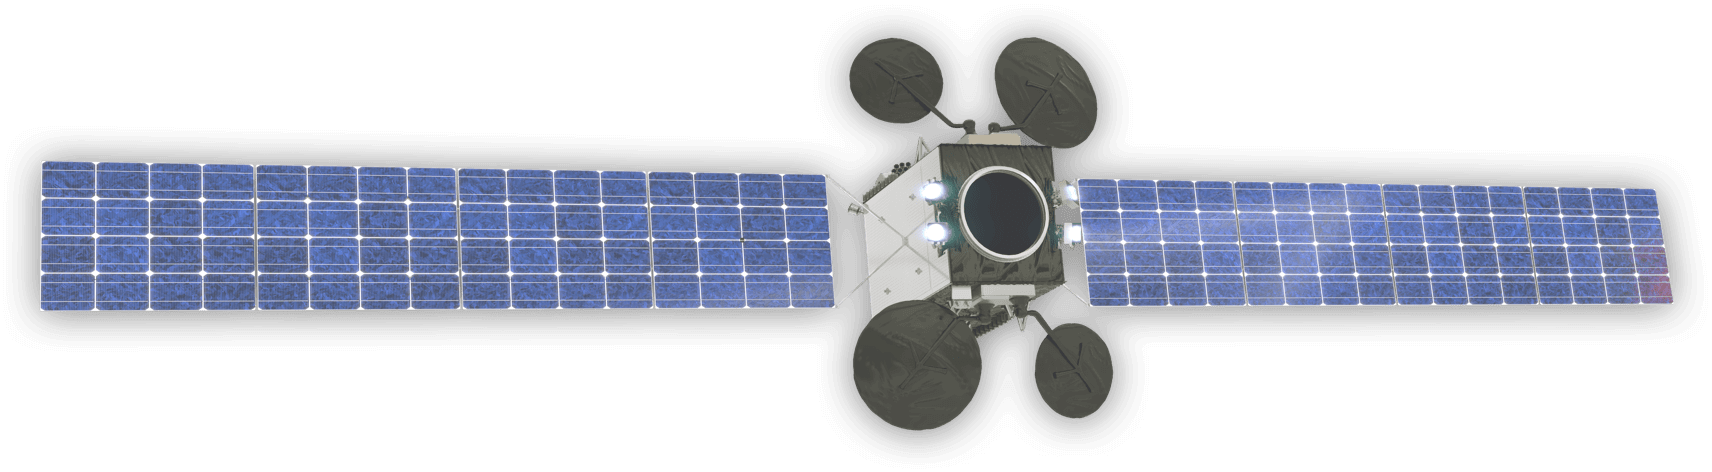 Electrical HTS Satellite - Gsatcom